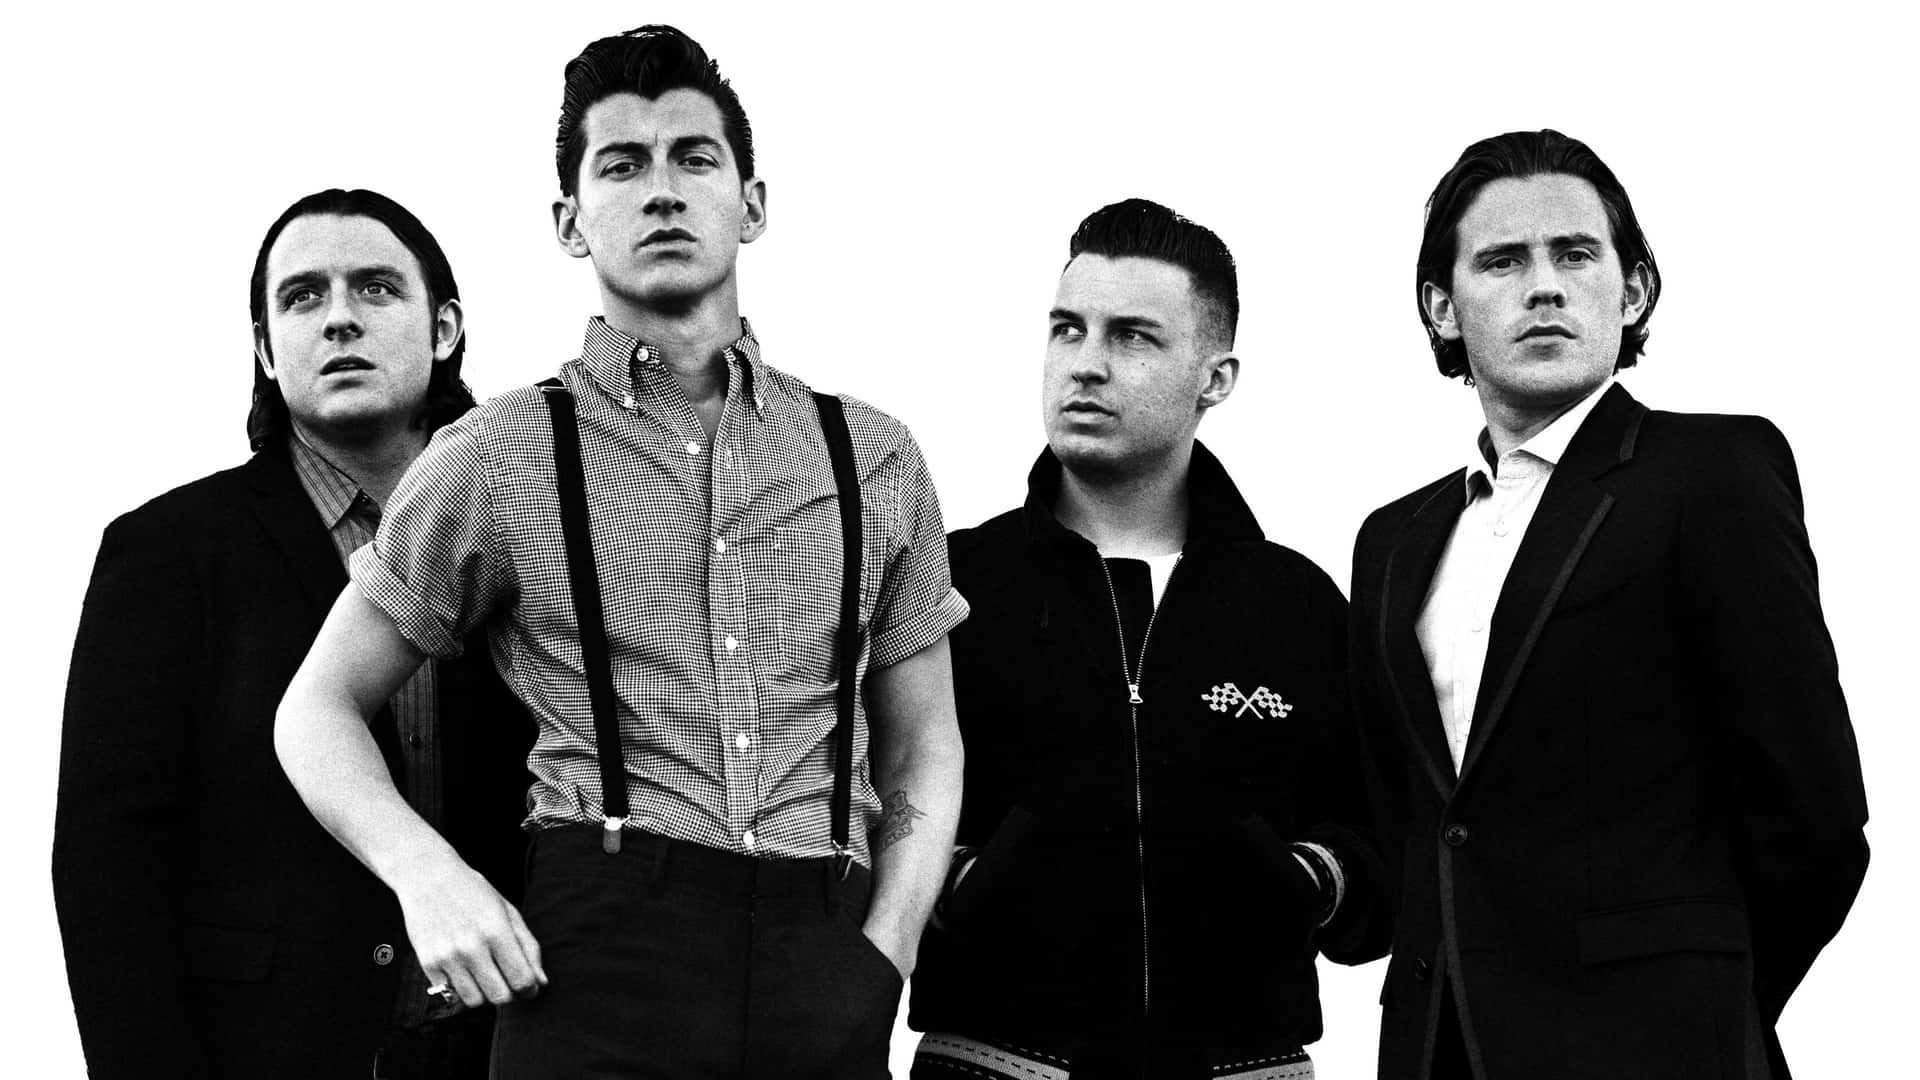 Arctic Monkeys Band Portrait Background